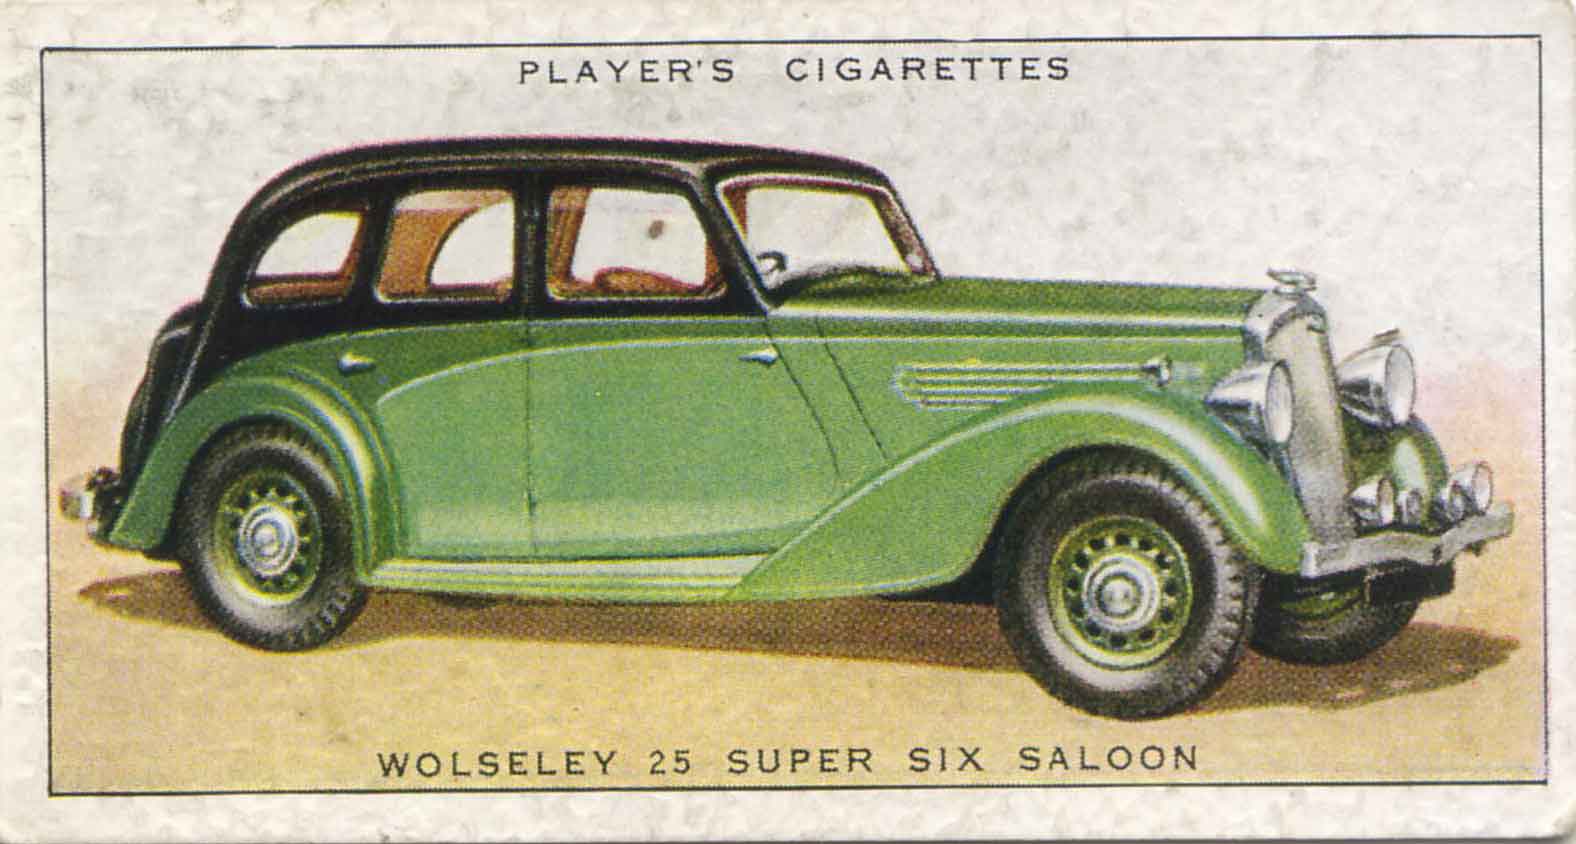 Wolseley 25 Super Six Saloon. 1937 cigarette card.